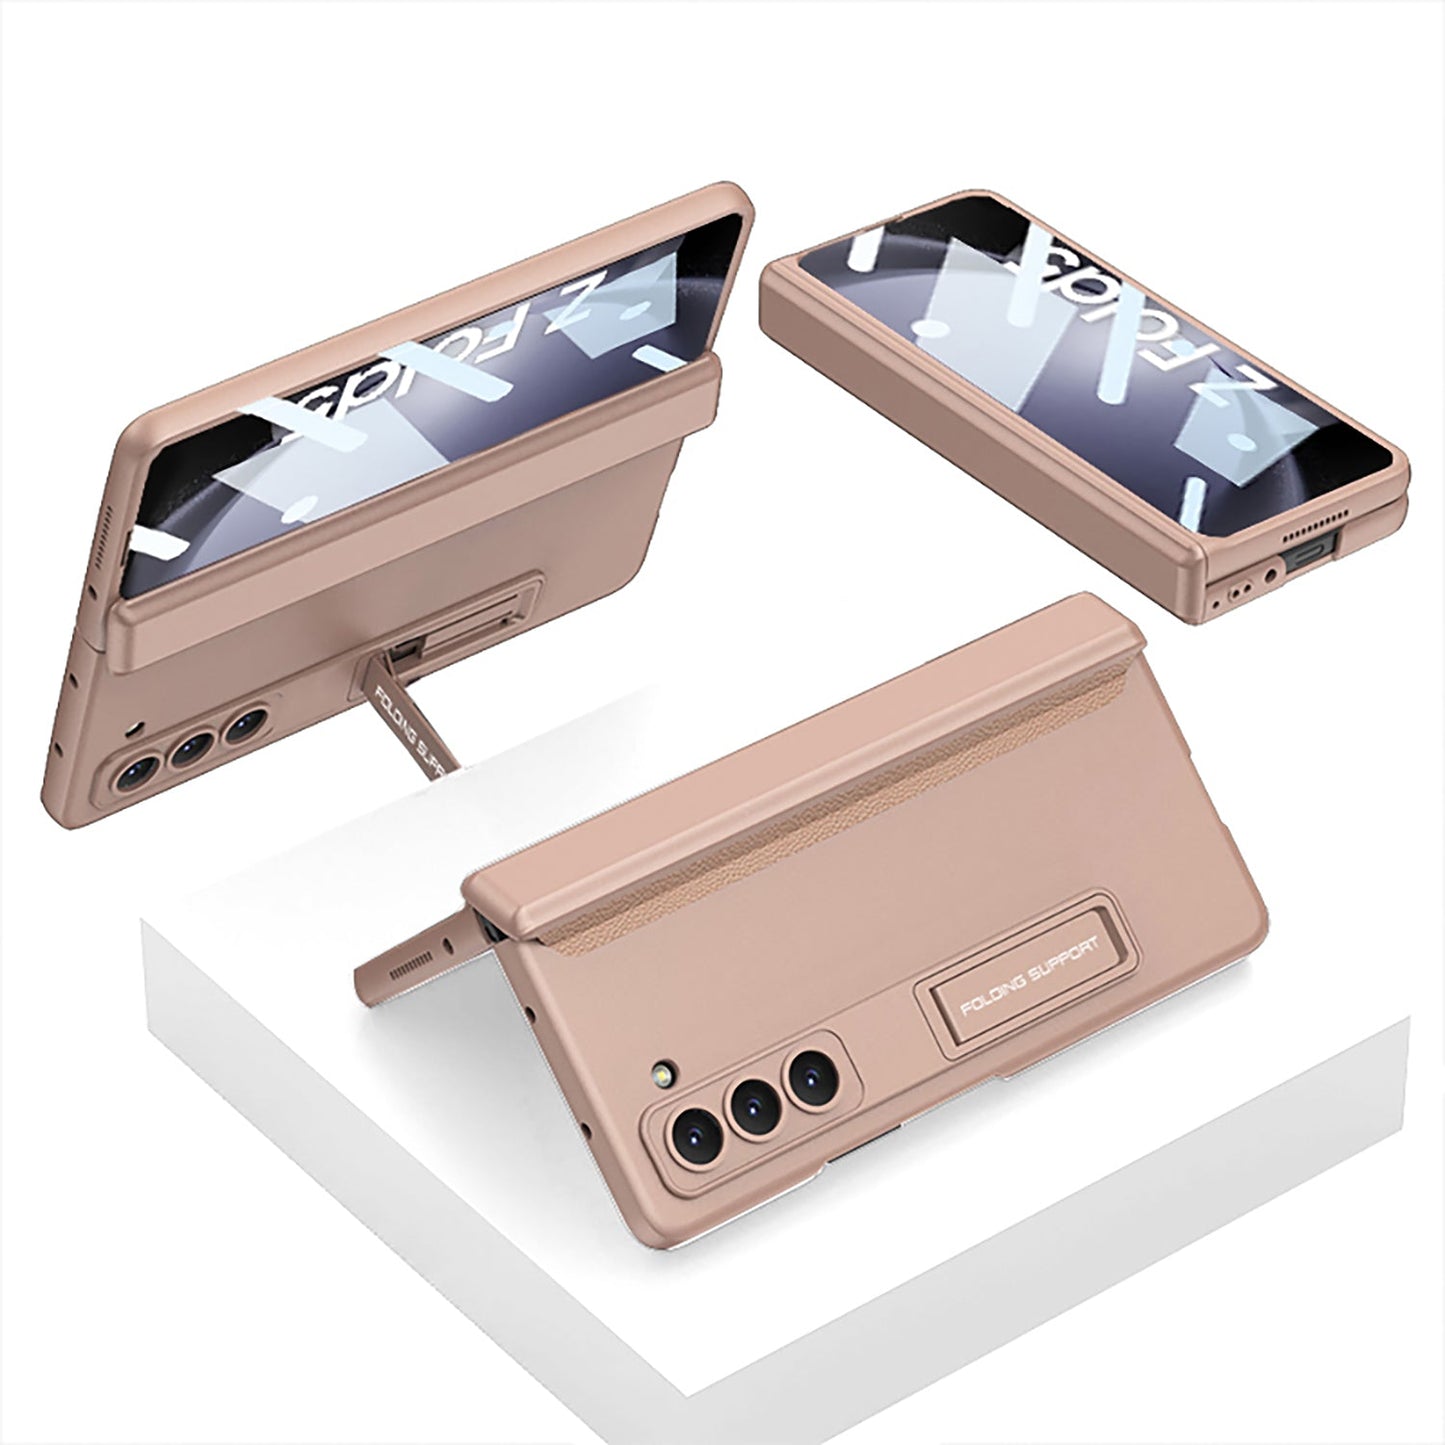 360° Slim Hinge Hidden Bracket Screen protector Case - Z Fold Series